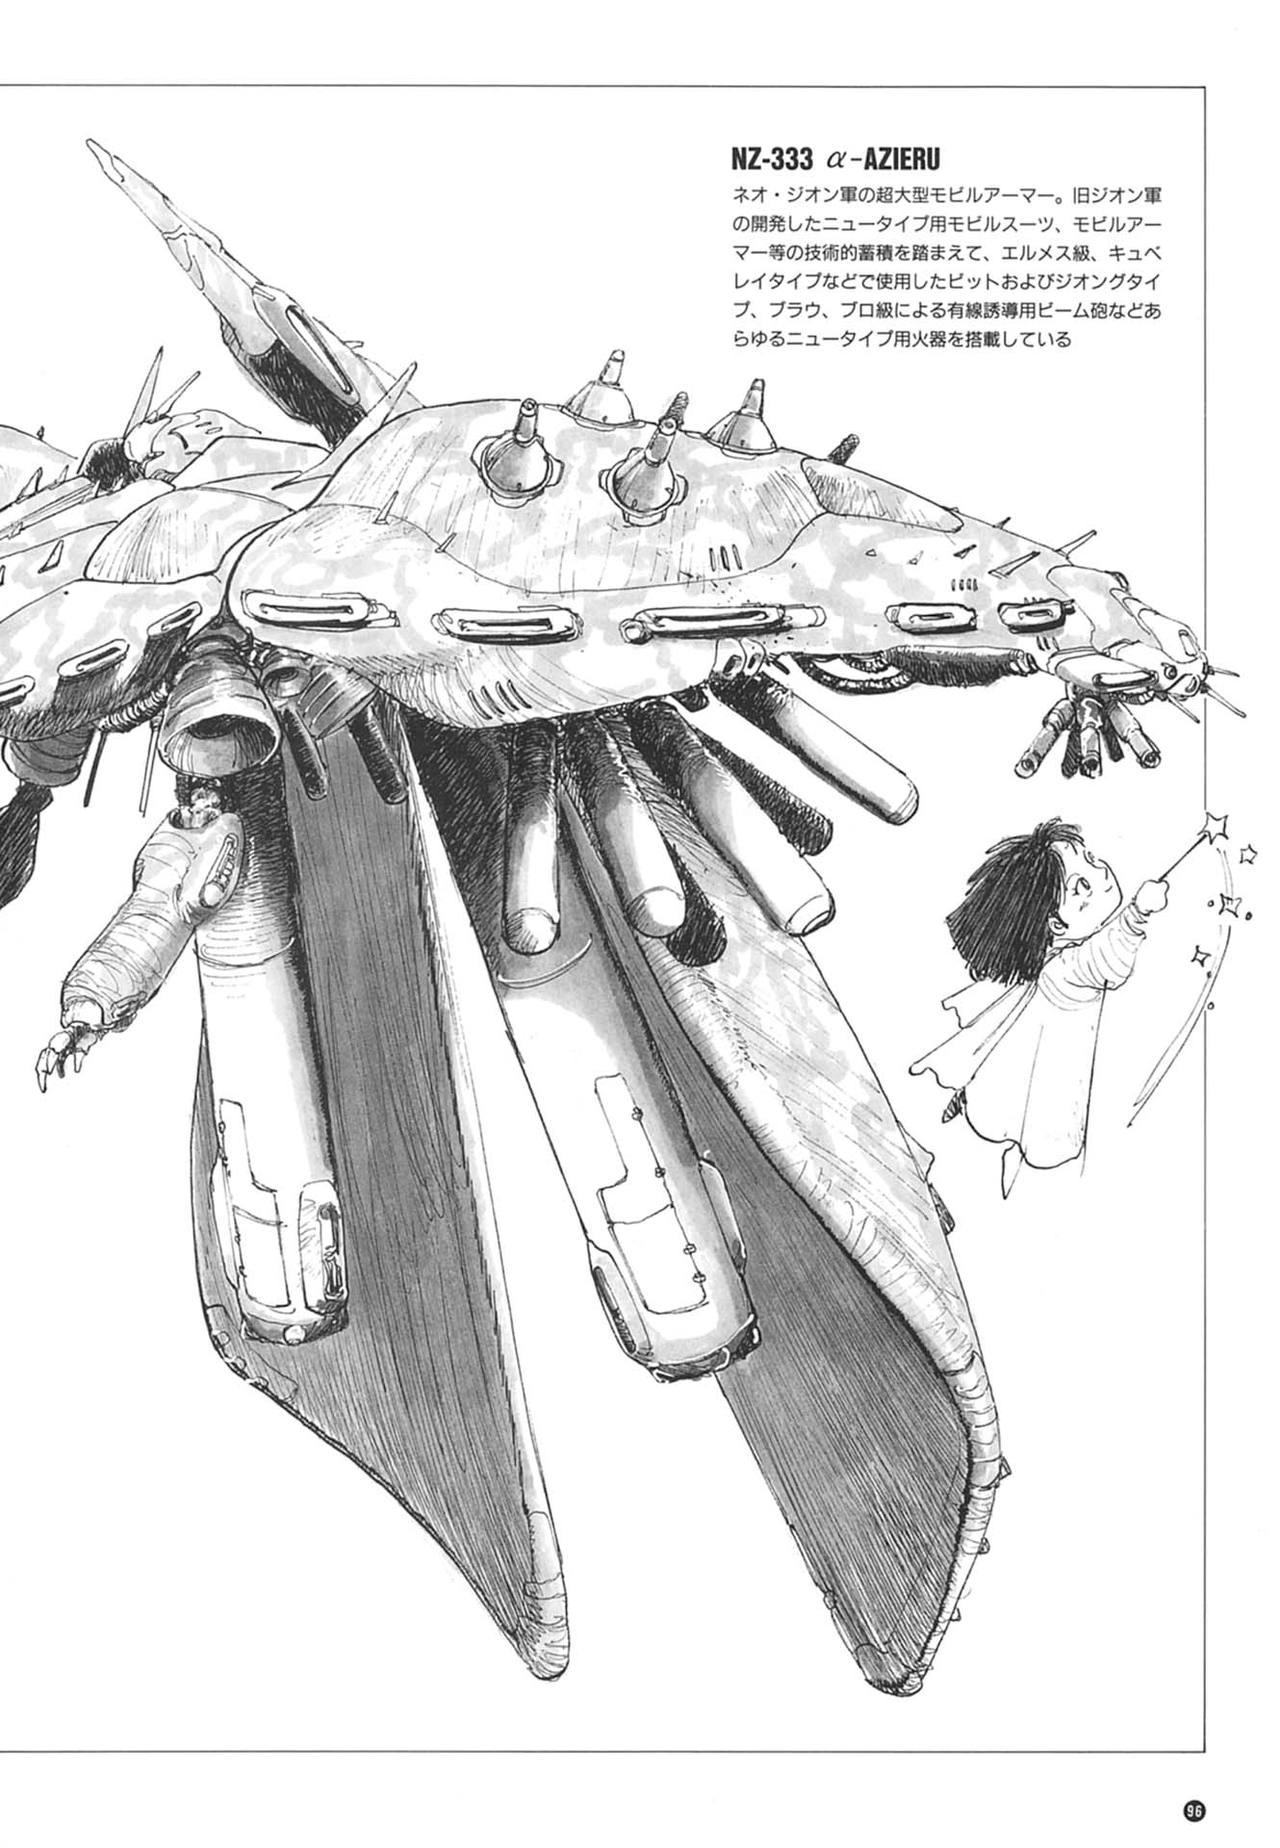 [Kazuhisa Kondo] Kazuhisa Kondo 2D & 3D Works - Go Ahead - From Mobile Suit Gundam to Original Mechanism 95